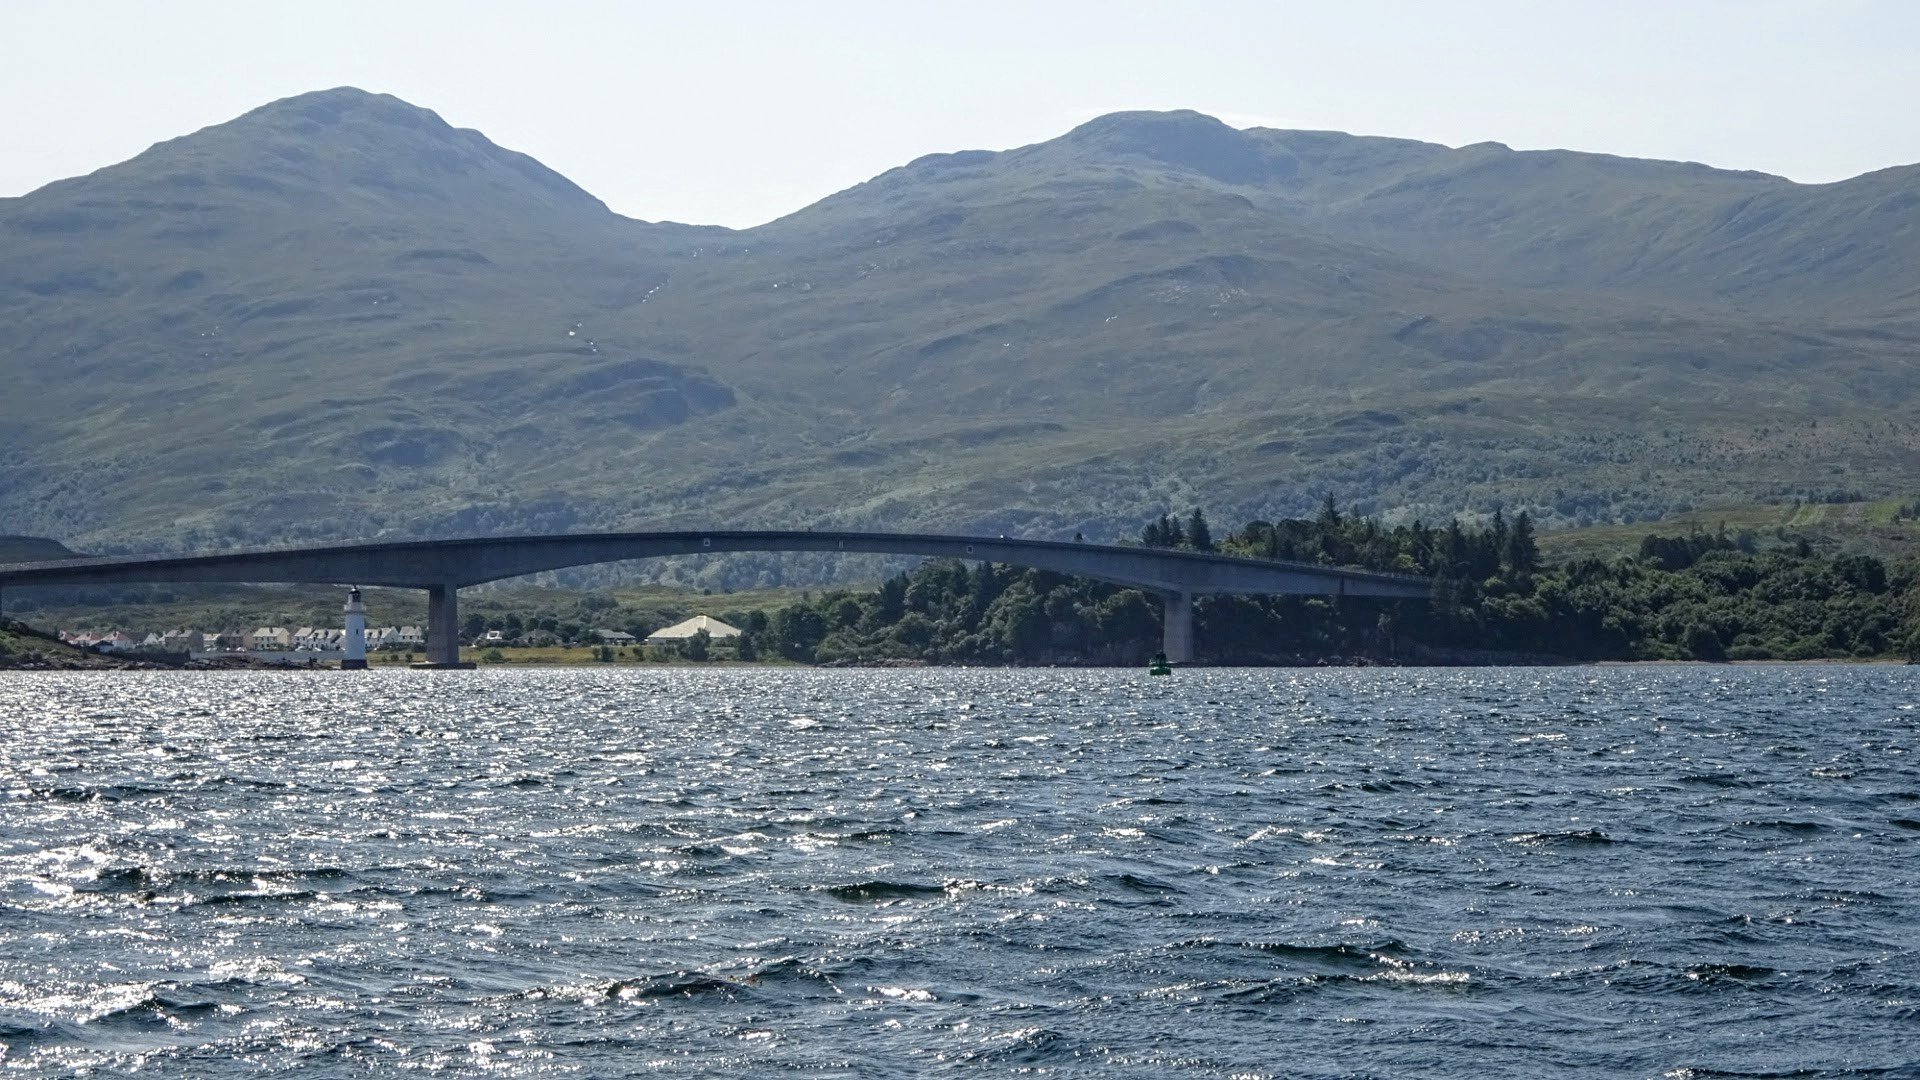 Skye Bridge With Skye In The Background